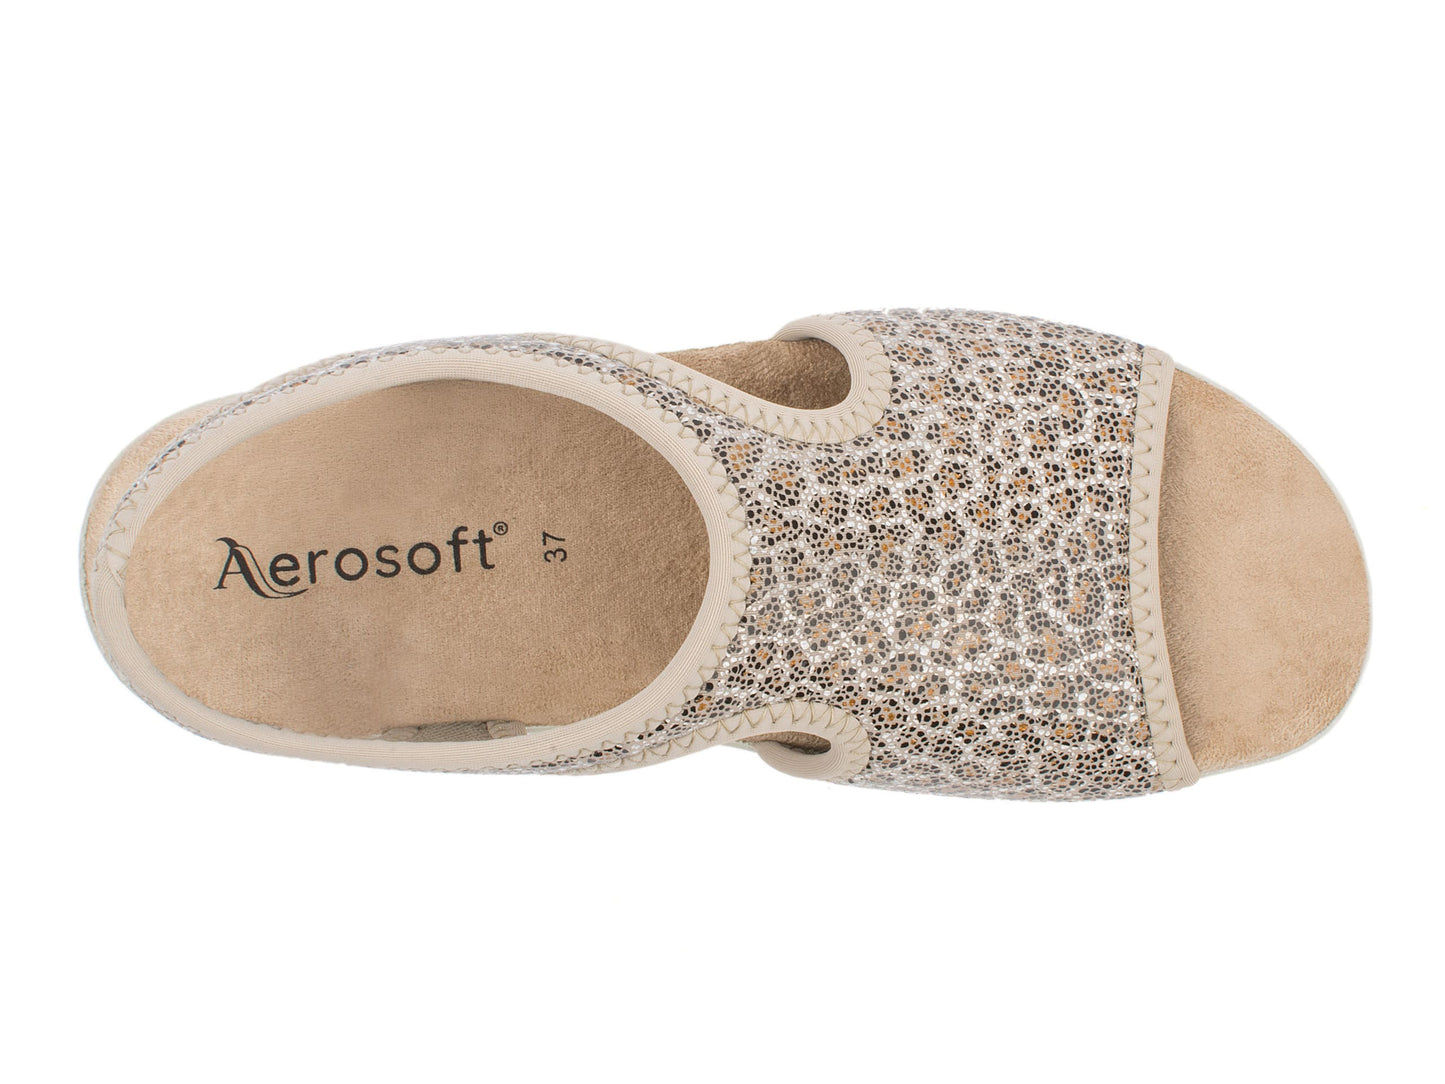 Aerosoft Damen Sandalette Stretch 05